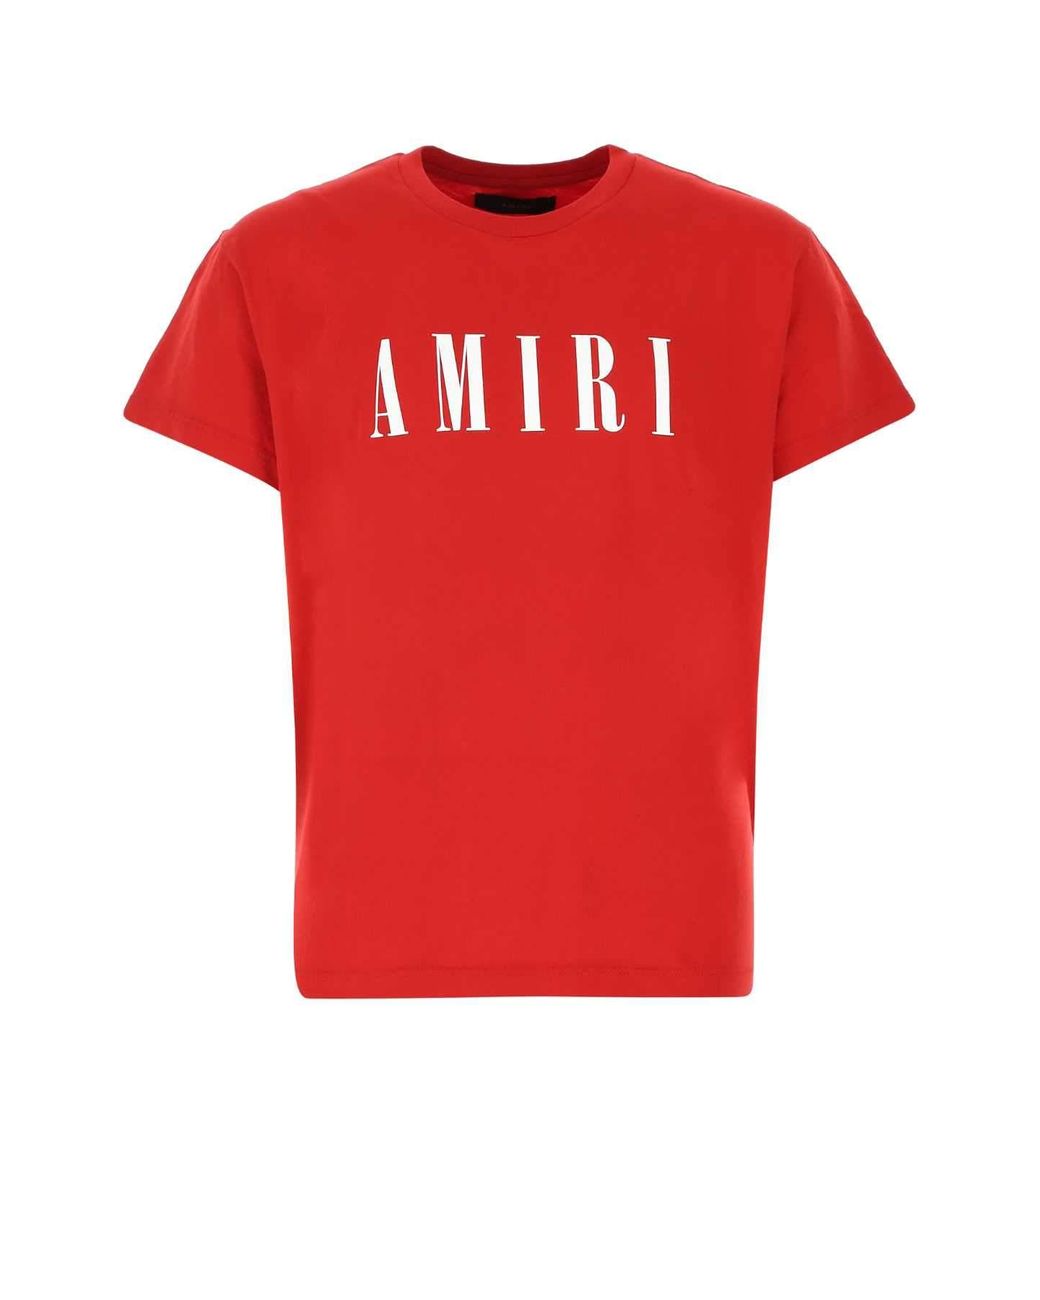 Amiri Logo Tee in Red for Men